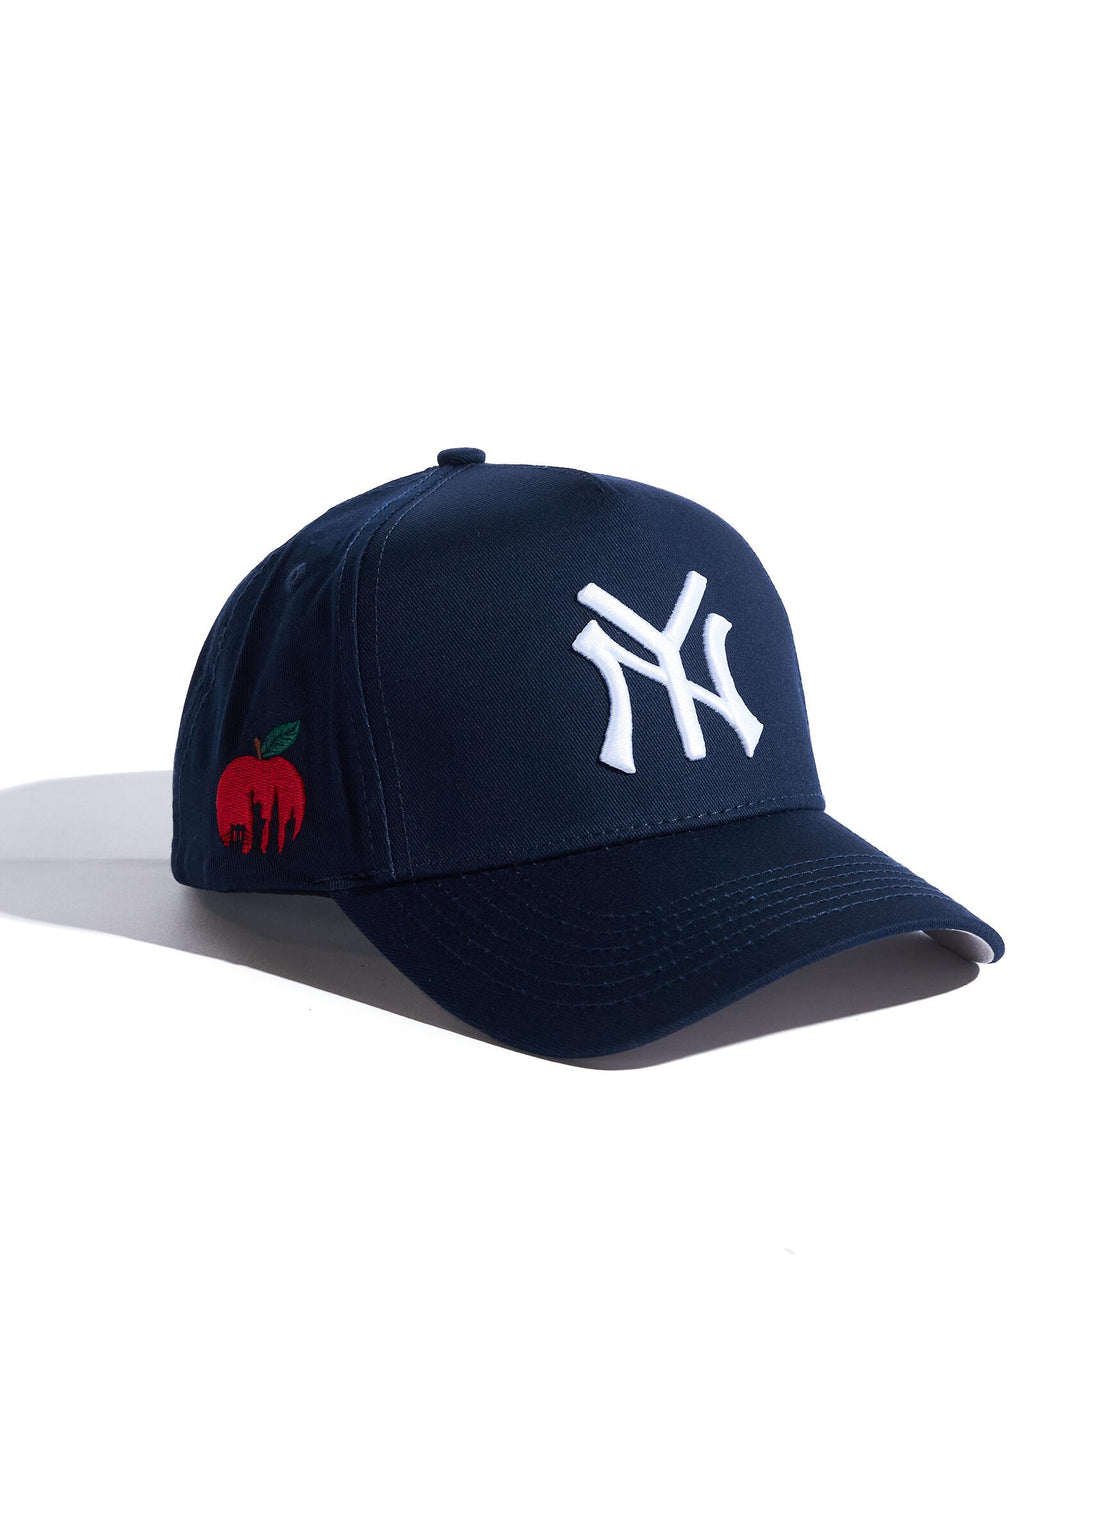 Reference New York Yankees Snapback - Navy